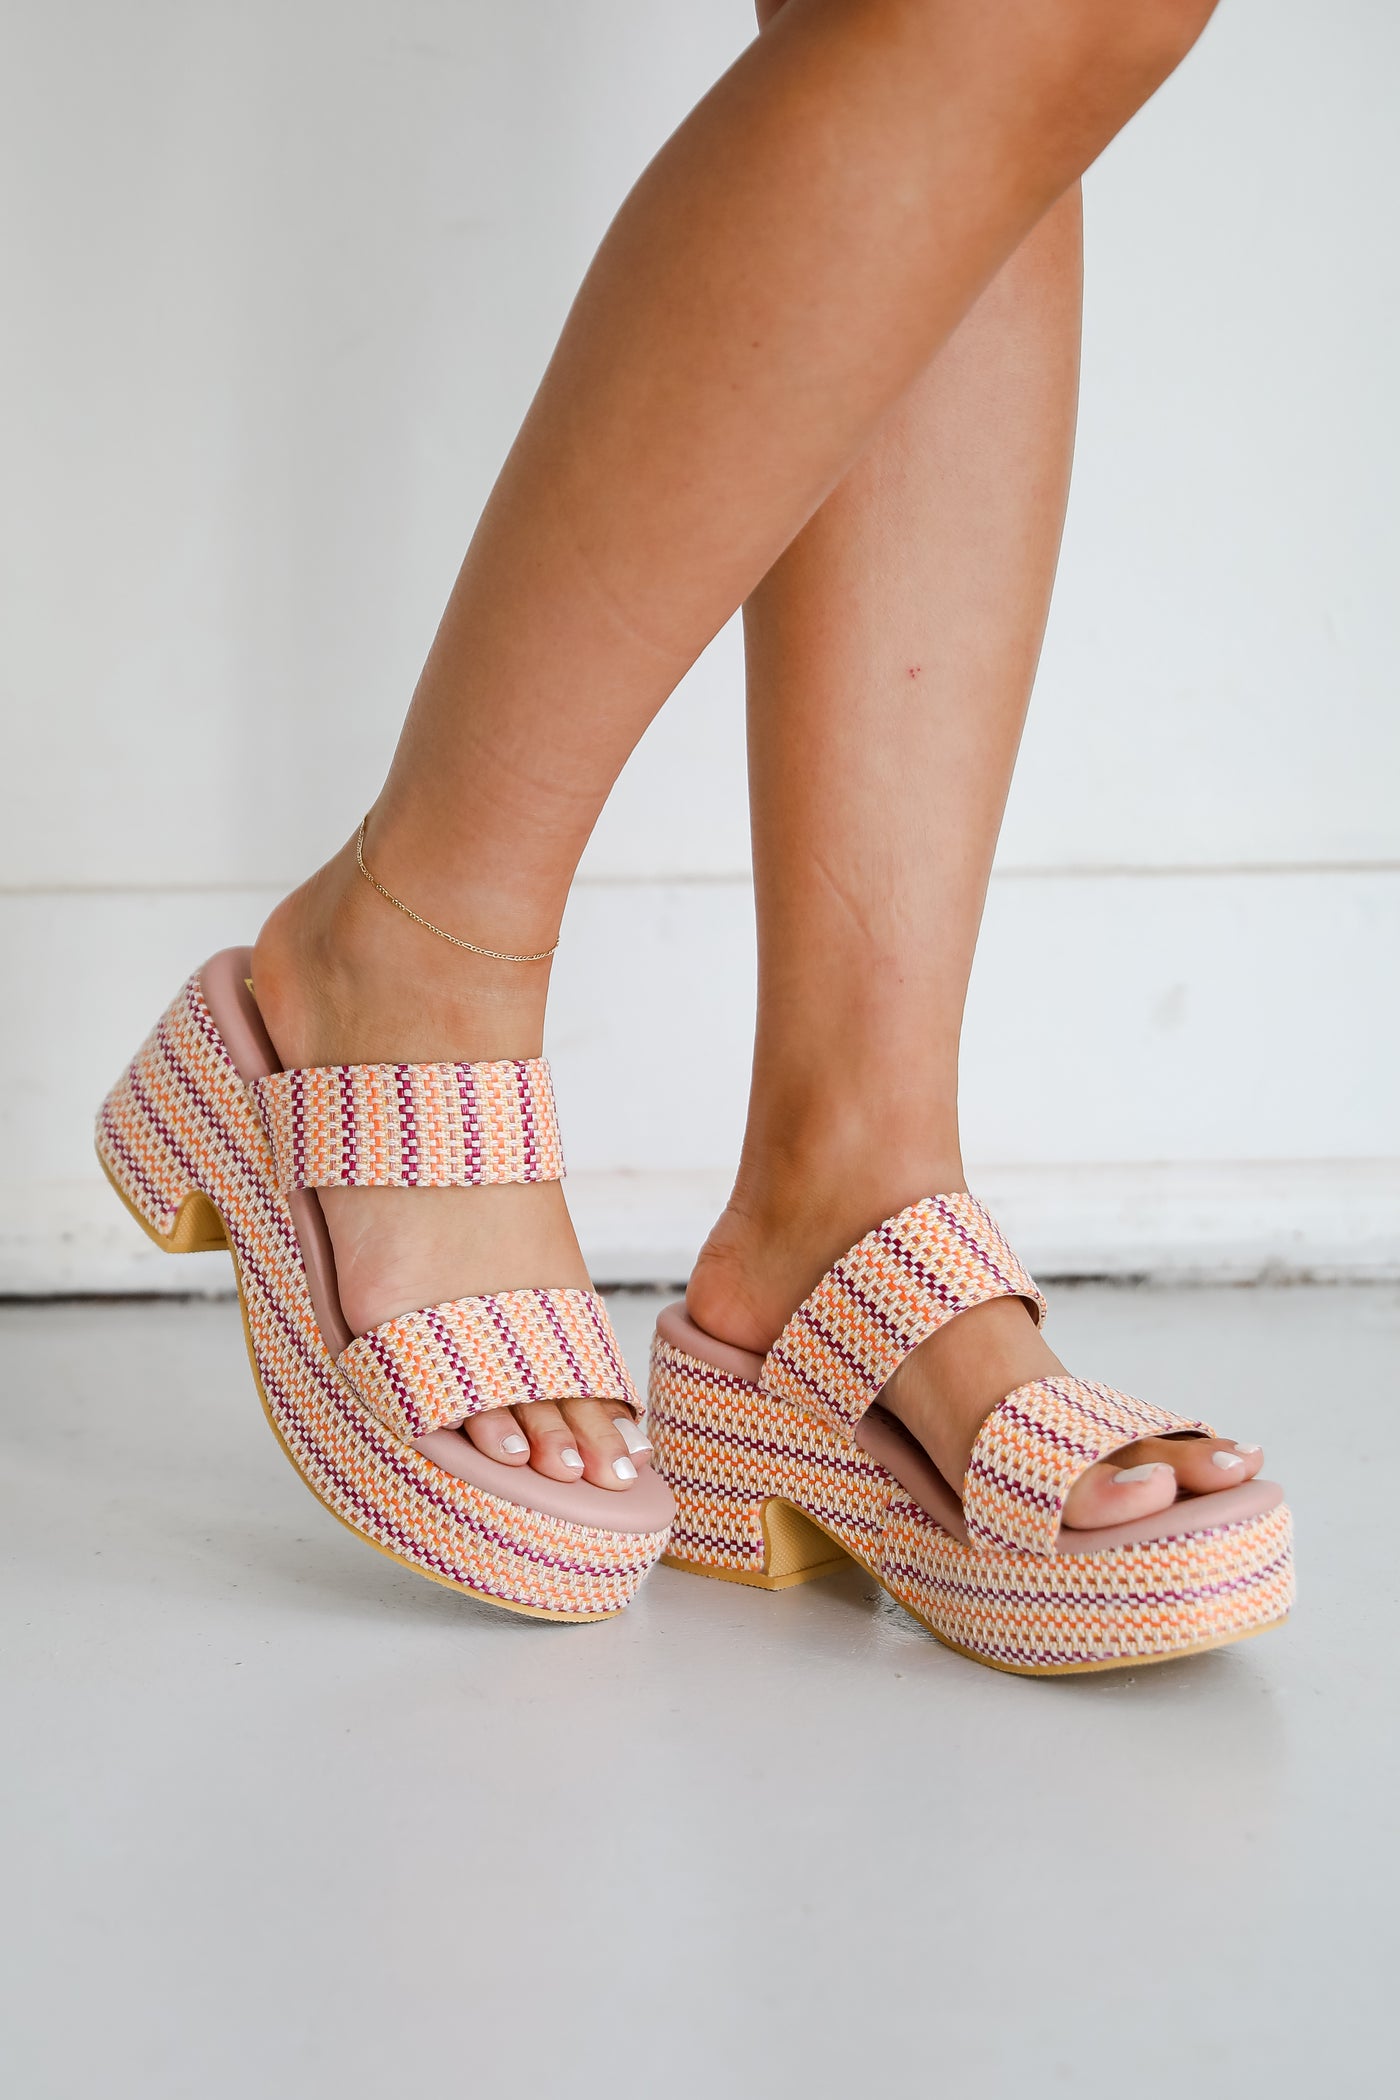 platform sandals for women